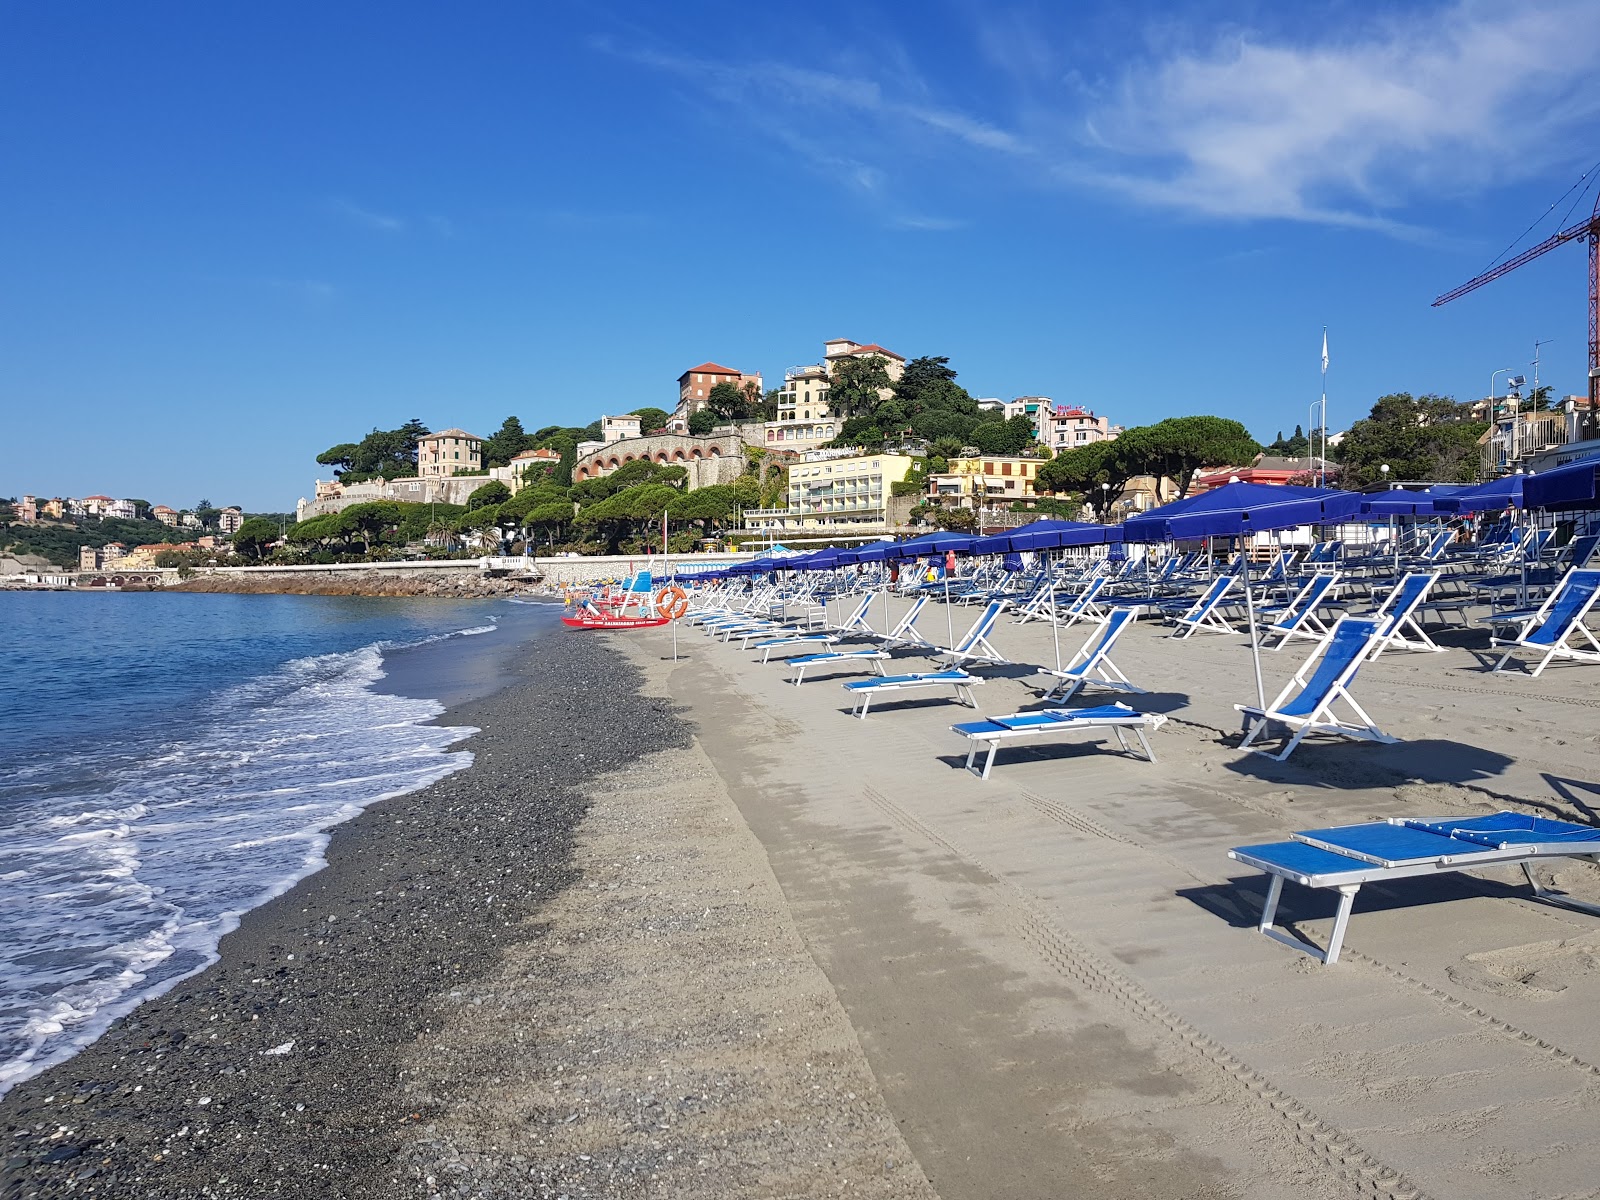 Foto van Piani beach met ruime baai